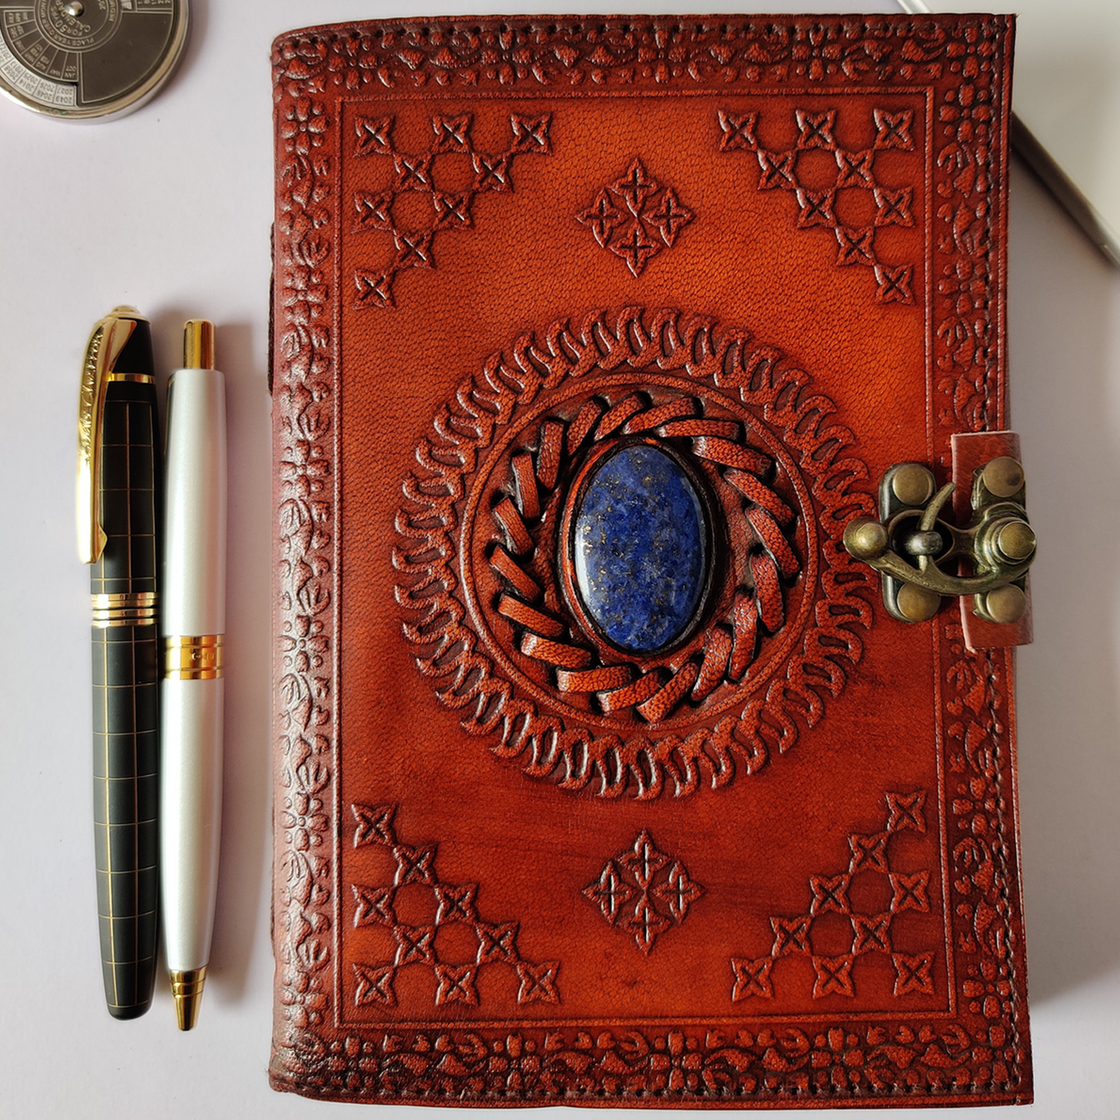 Utopian Leather Journal with Semi-Precious Stone